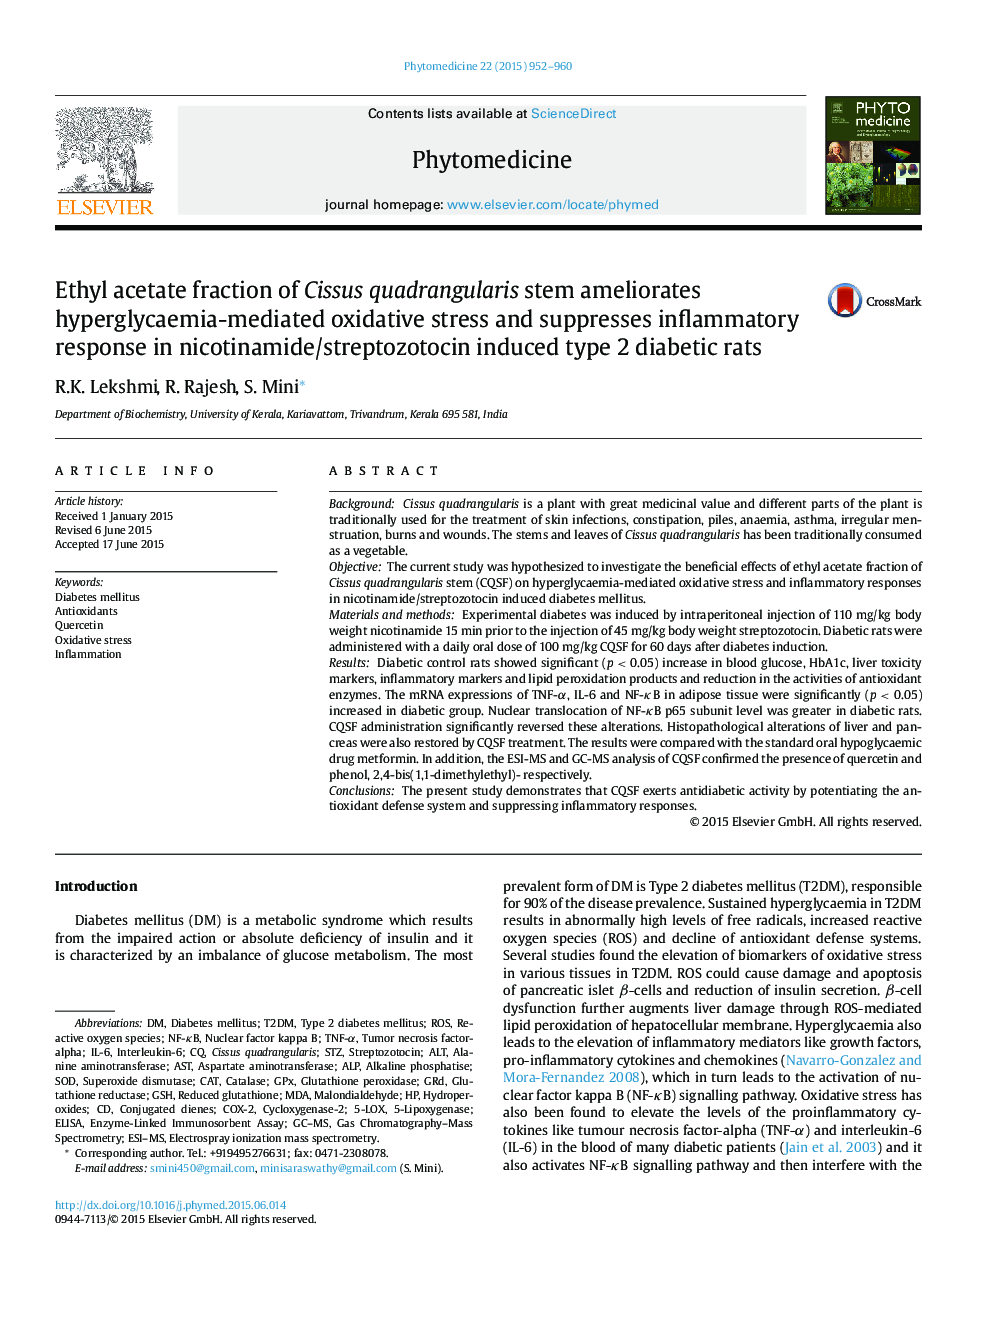 Ethyl acetate fraction of Cissus quadrangularis stem ameliorates hyperglycaemia-mediated oxidative stress and suppresses inflammatory response in nicotinamide/streptozotocin induced type 2 diabetic rats